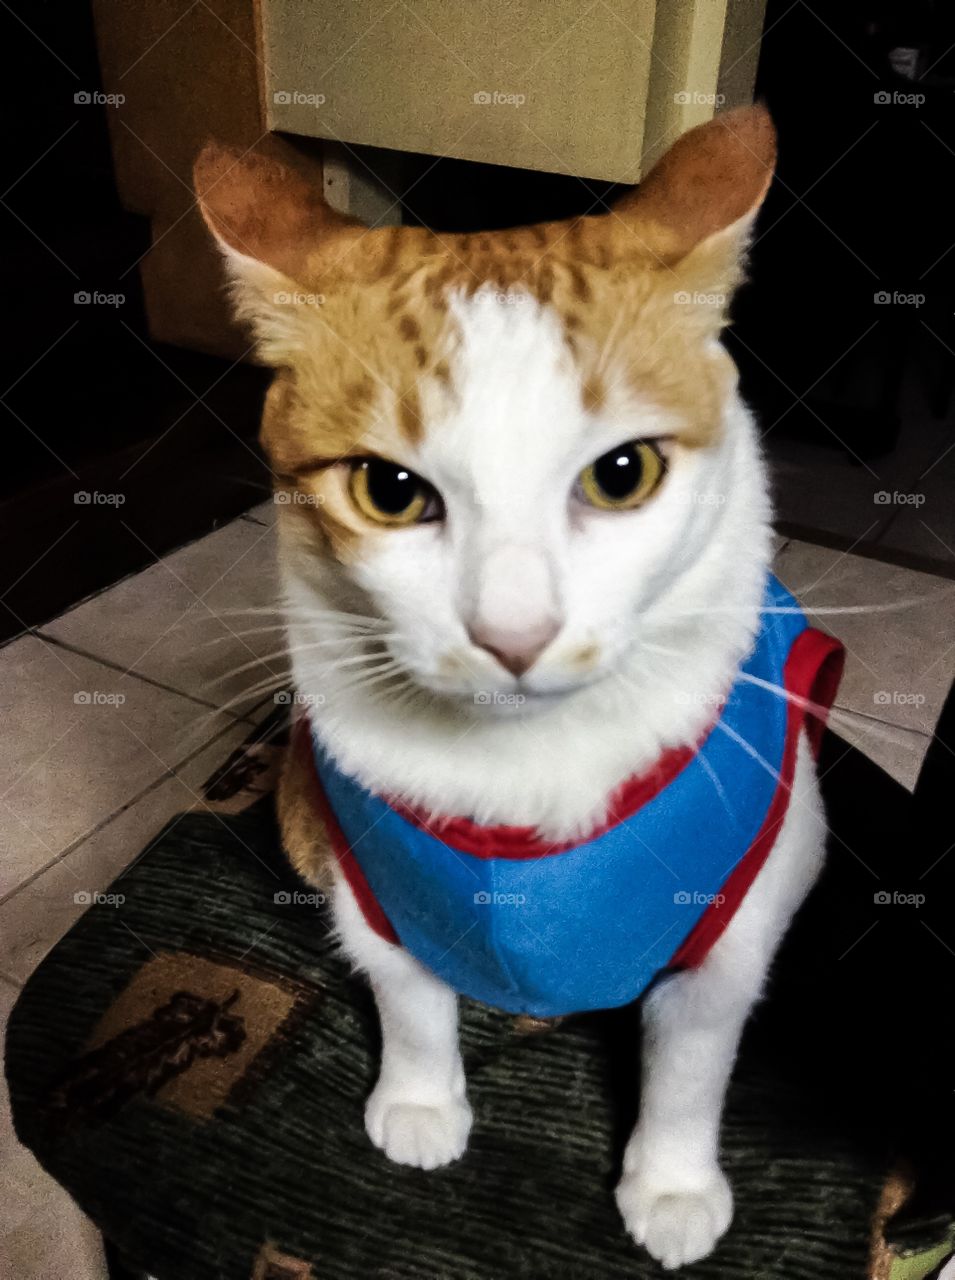 Cat wearing costume